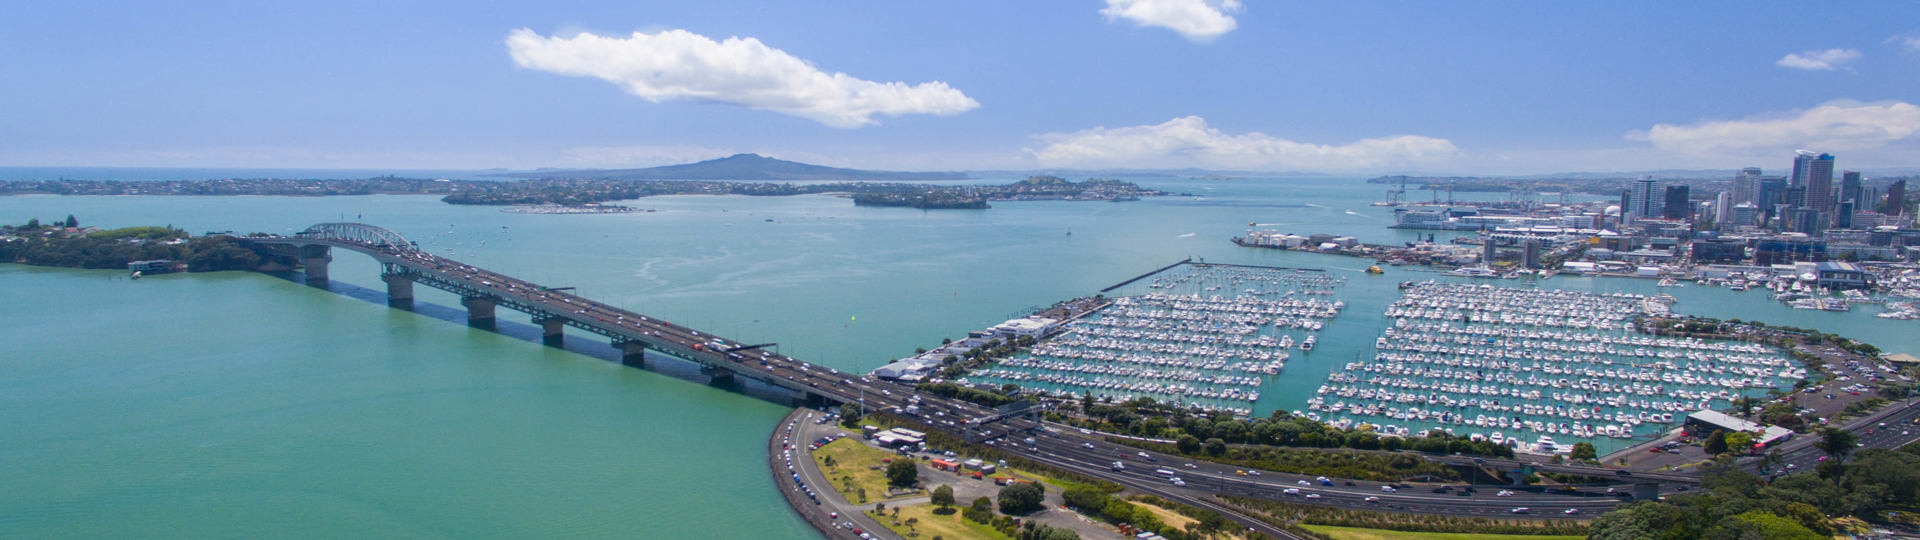 Auckland's Waitemata Harbour